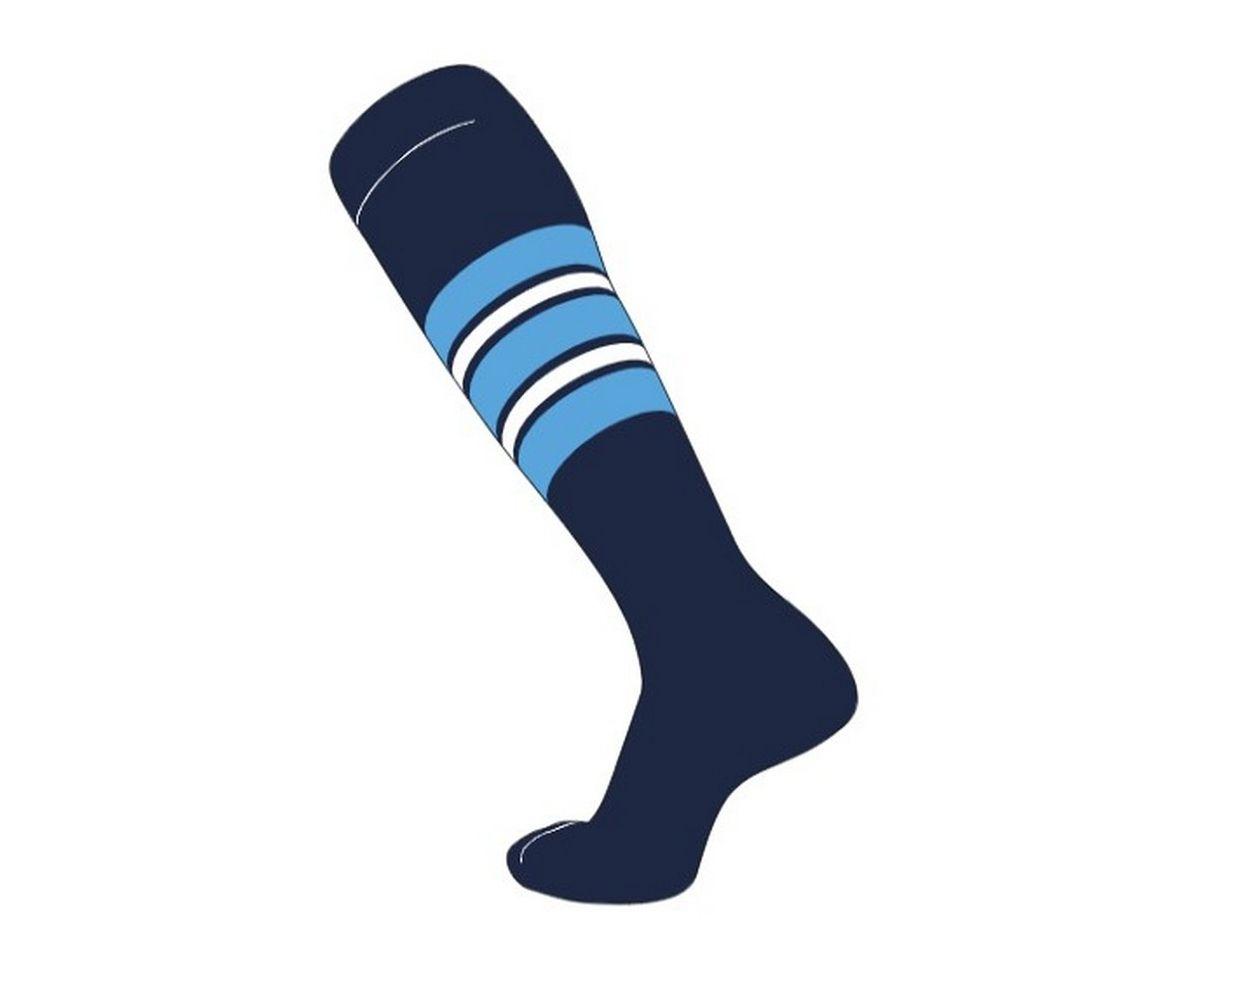 How to Wear Baseball Socks? - Guide for High/Low/Stirrups Socks